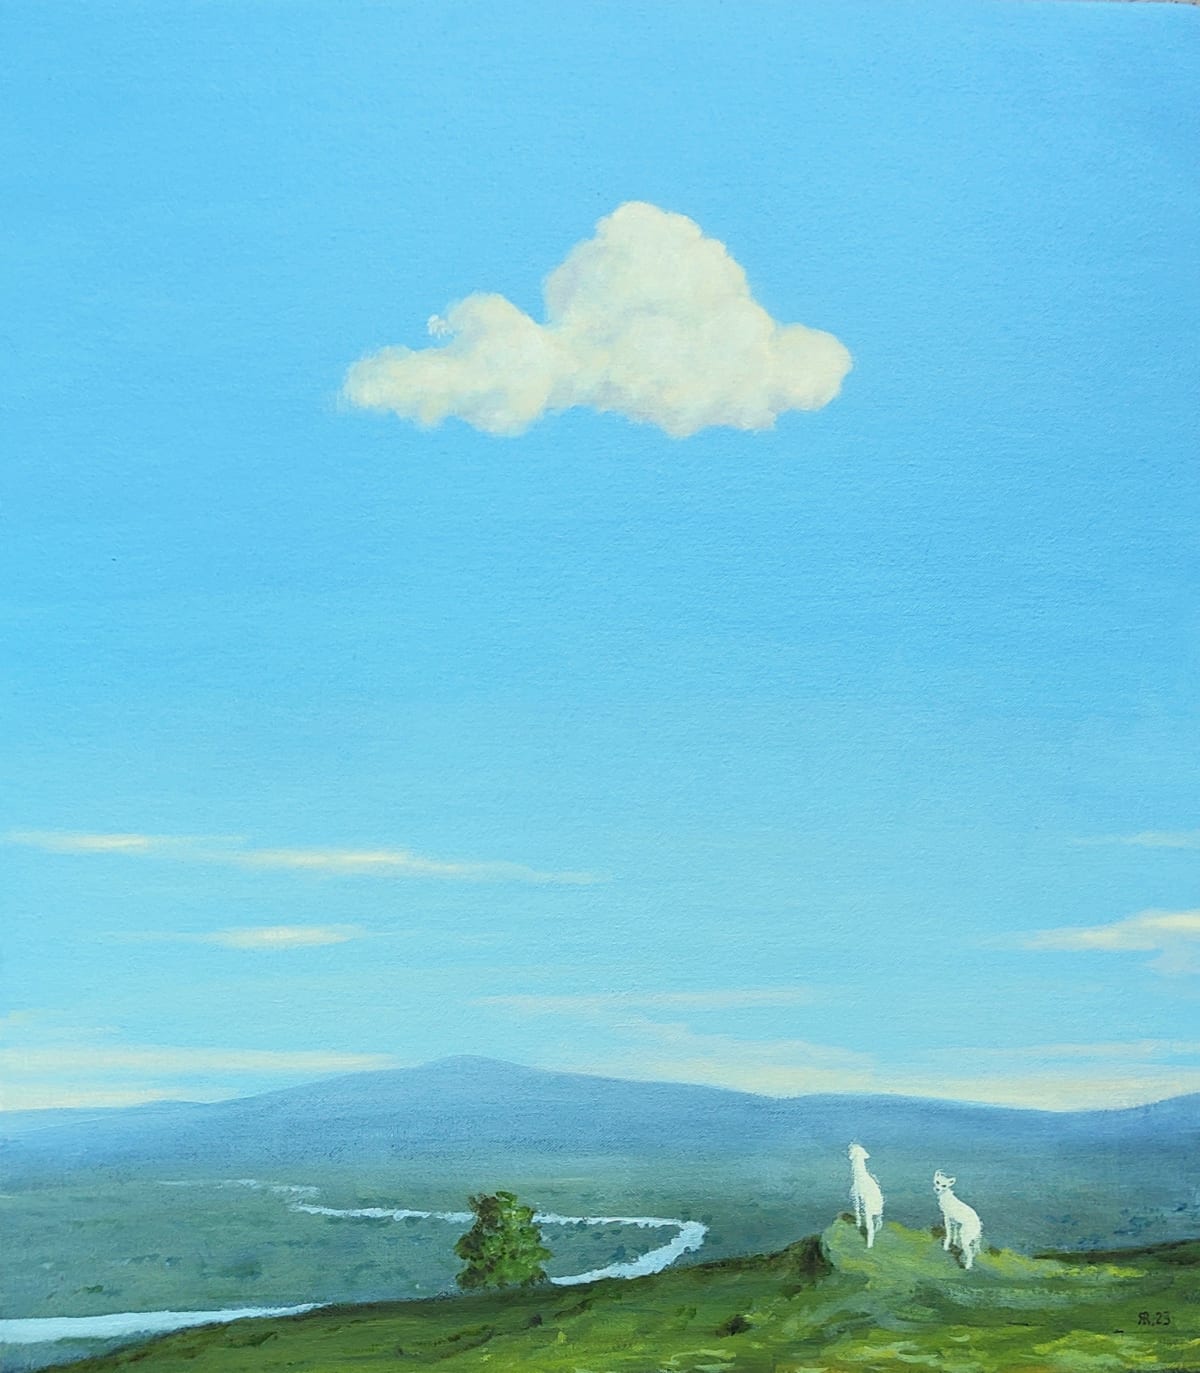 Cloud By Robert Ryan